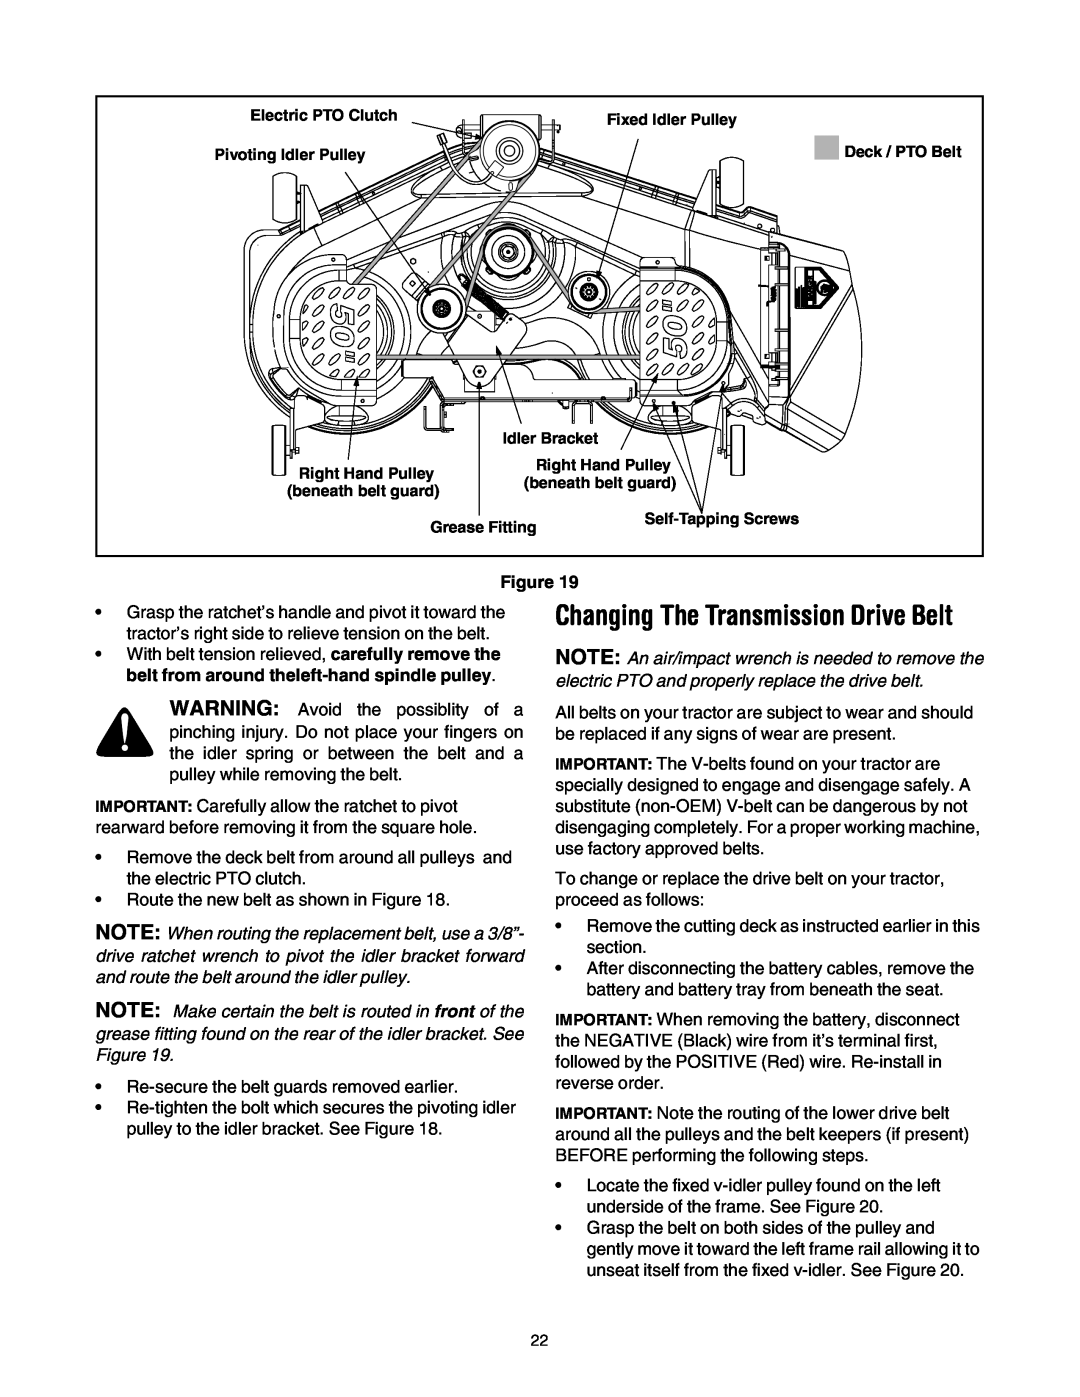 Bolens LT1024 manual Changing The Transmission Drive Belt 